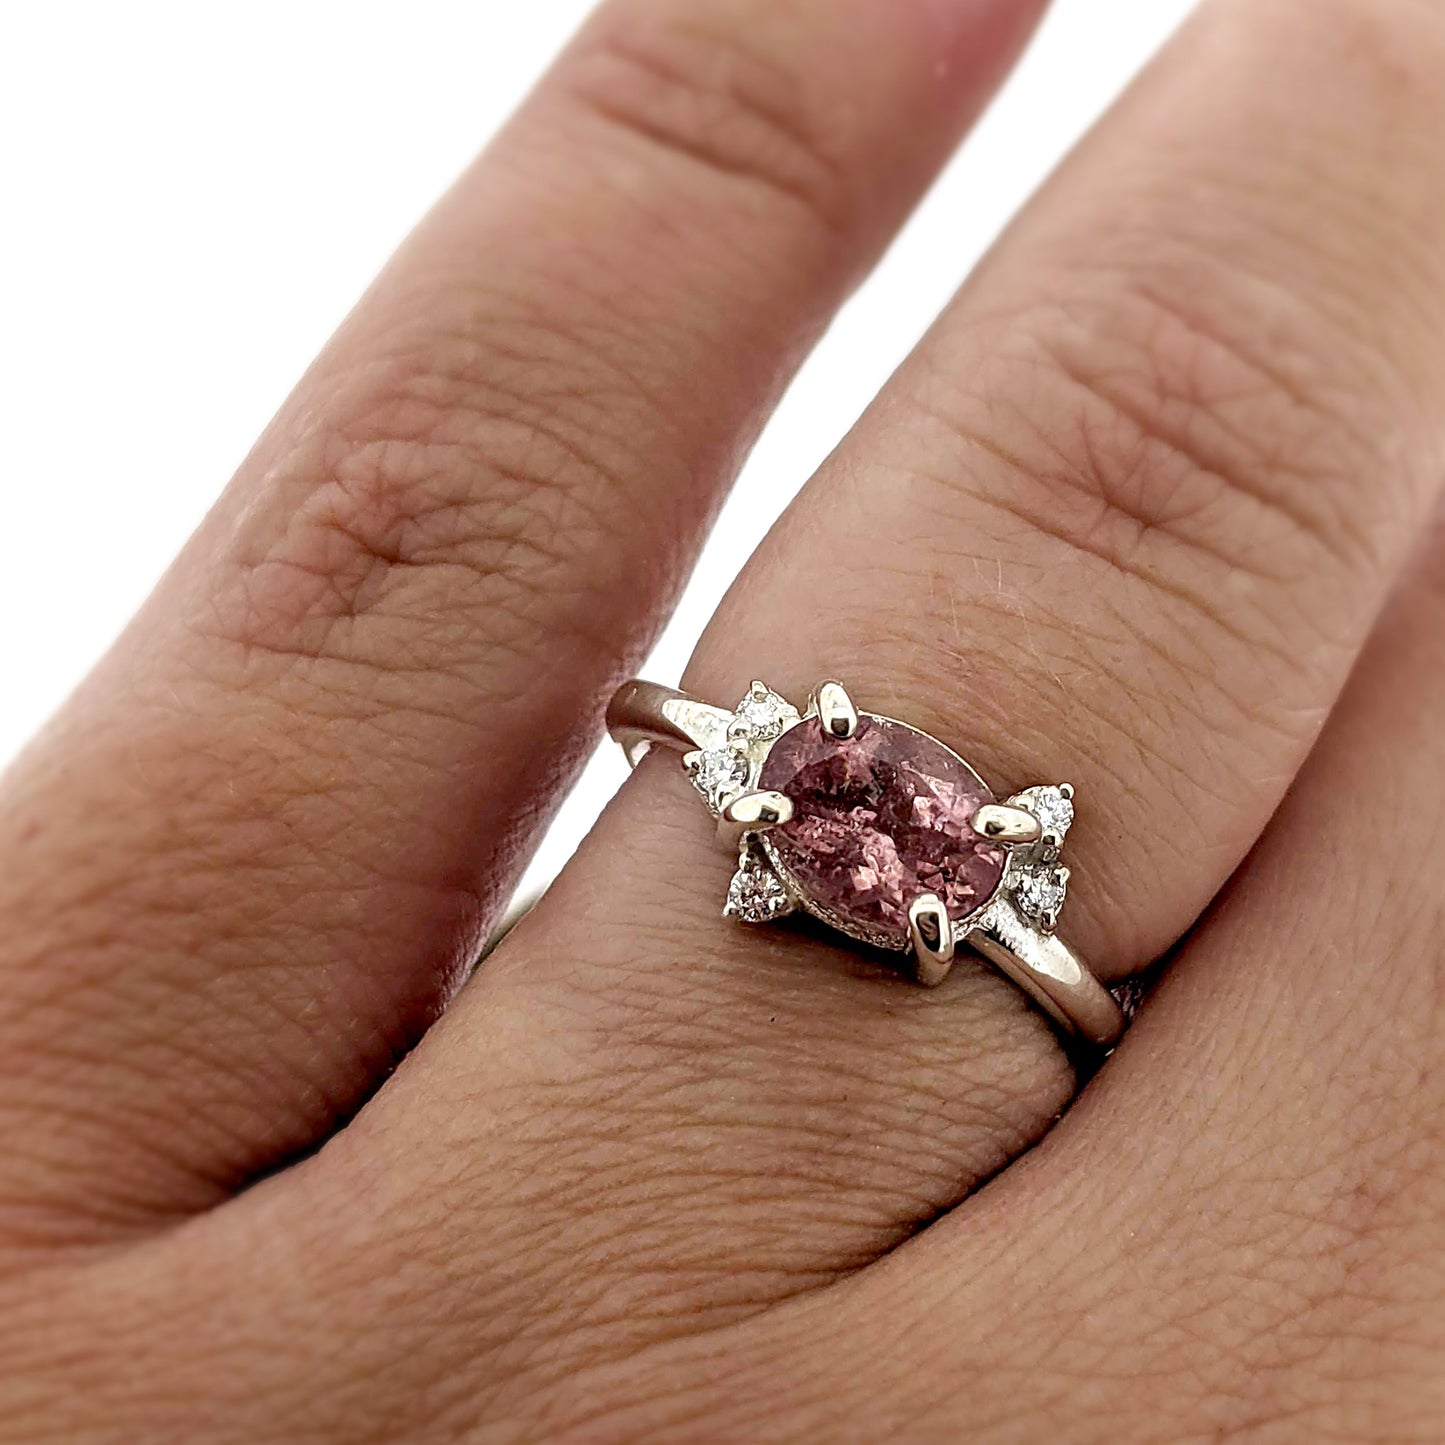 Roman Ring - Pink Tourmaline and Diamond